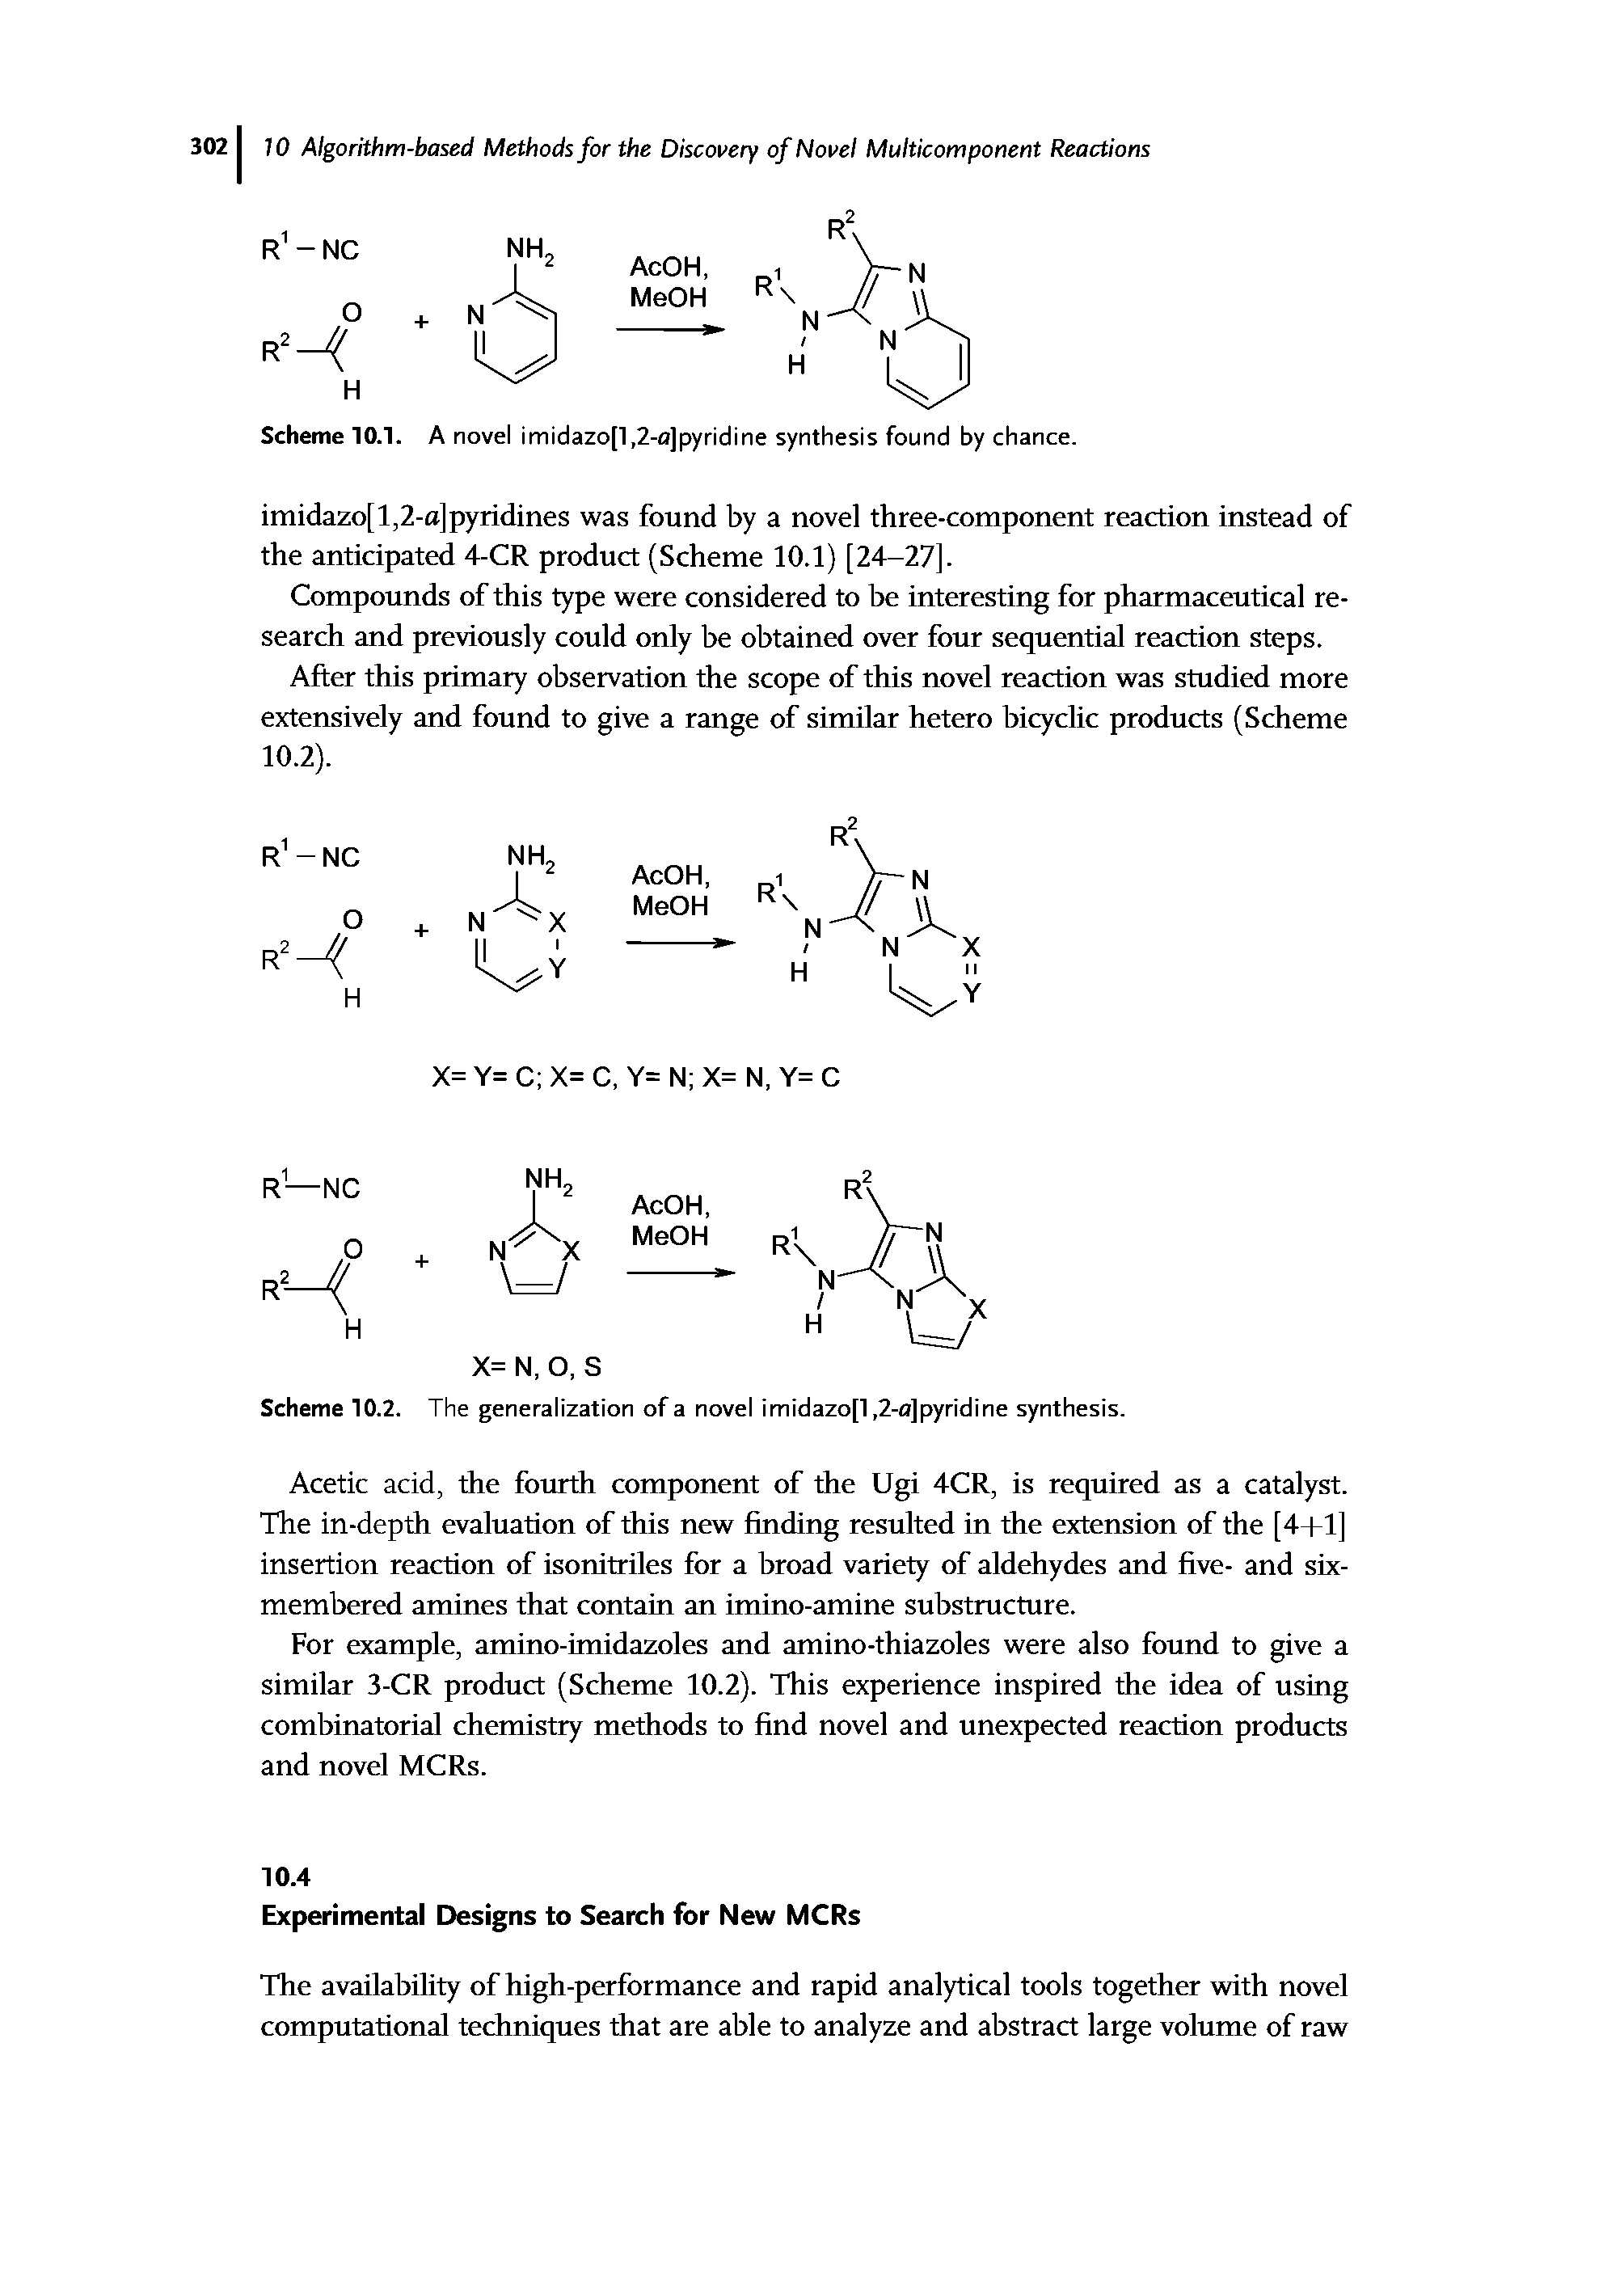 Scheme 10.2. The generalization of a novel imidazo[l, 2-o]pyridine synthesis.